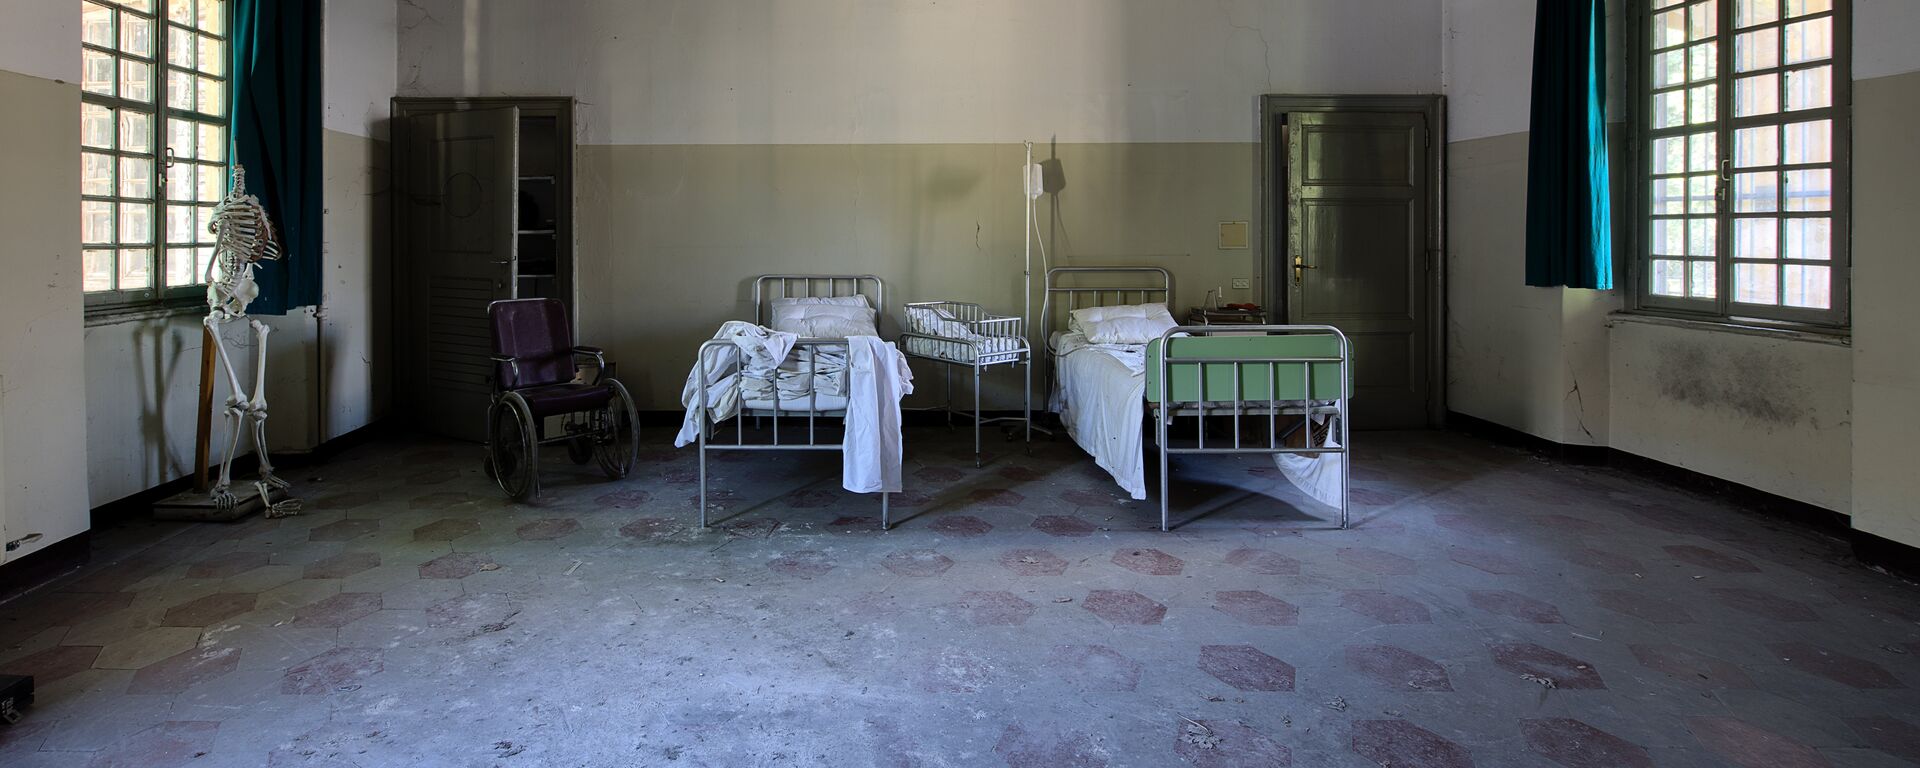 Un hospital (imagen referencial) - Sputnik Mundo, 1920, 02.11.2021